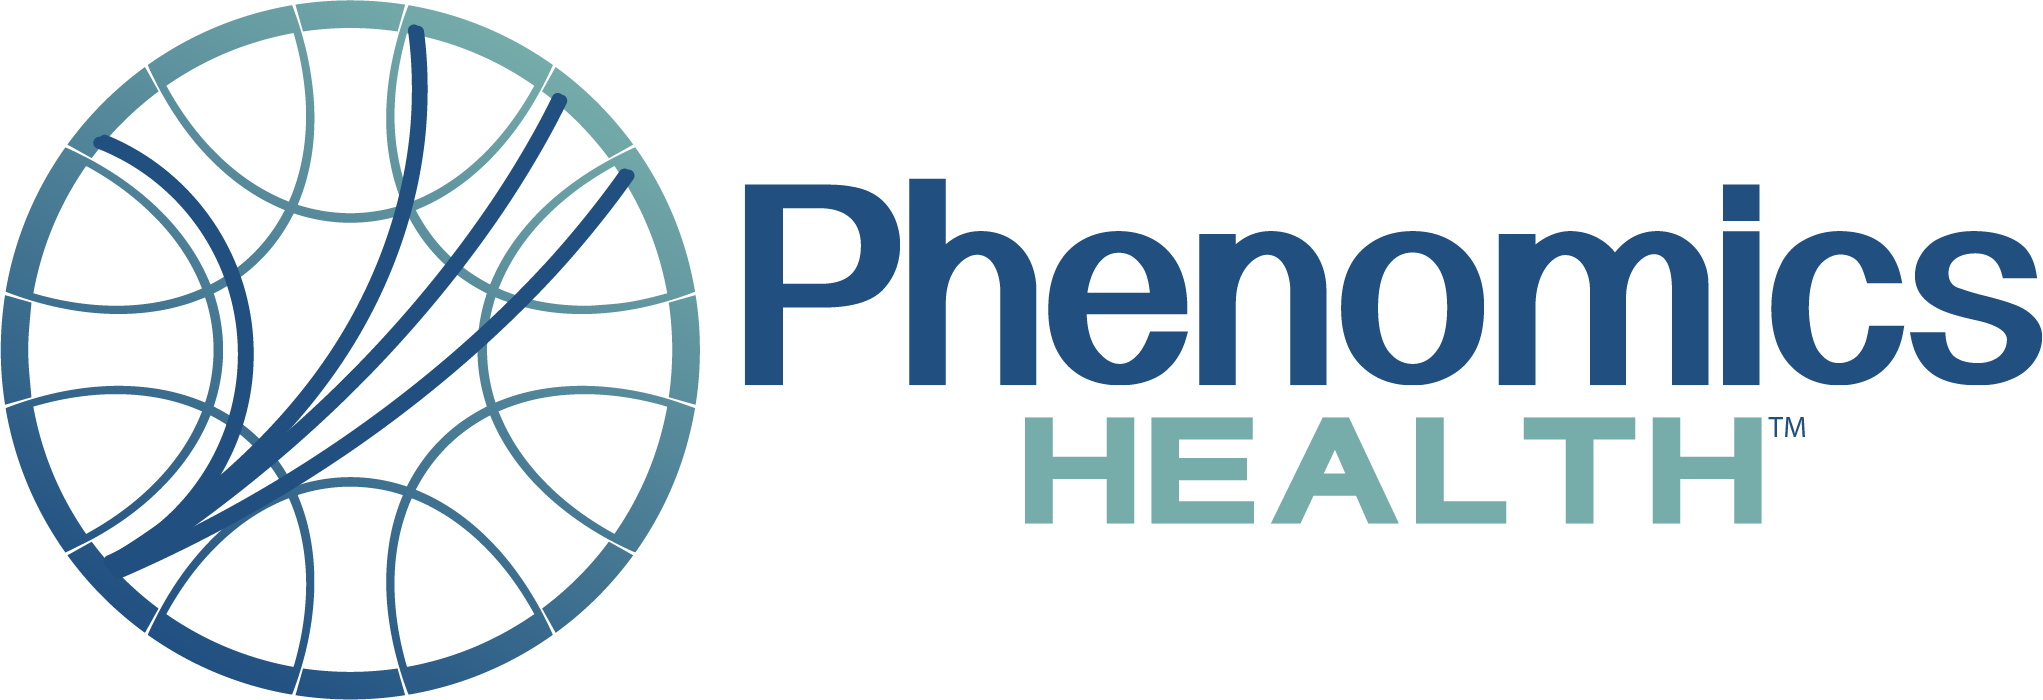 Phenomics Health logo